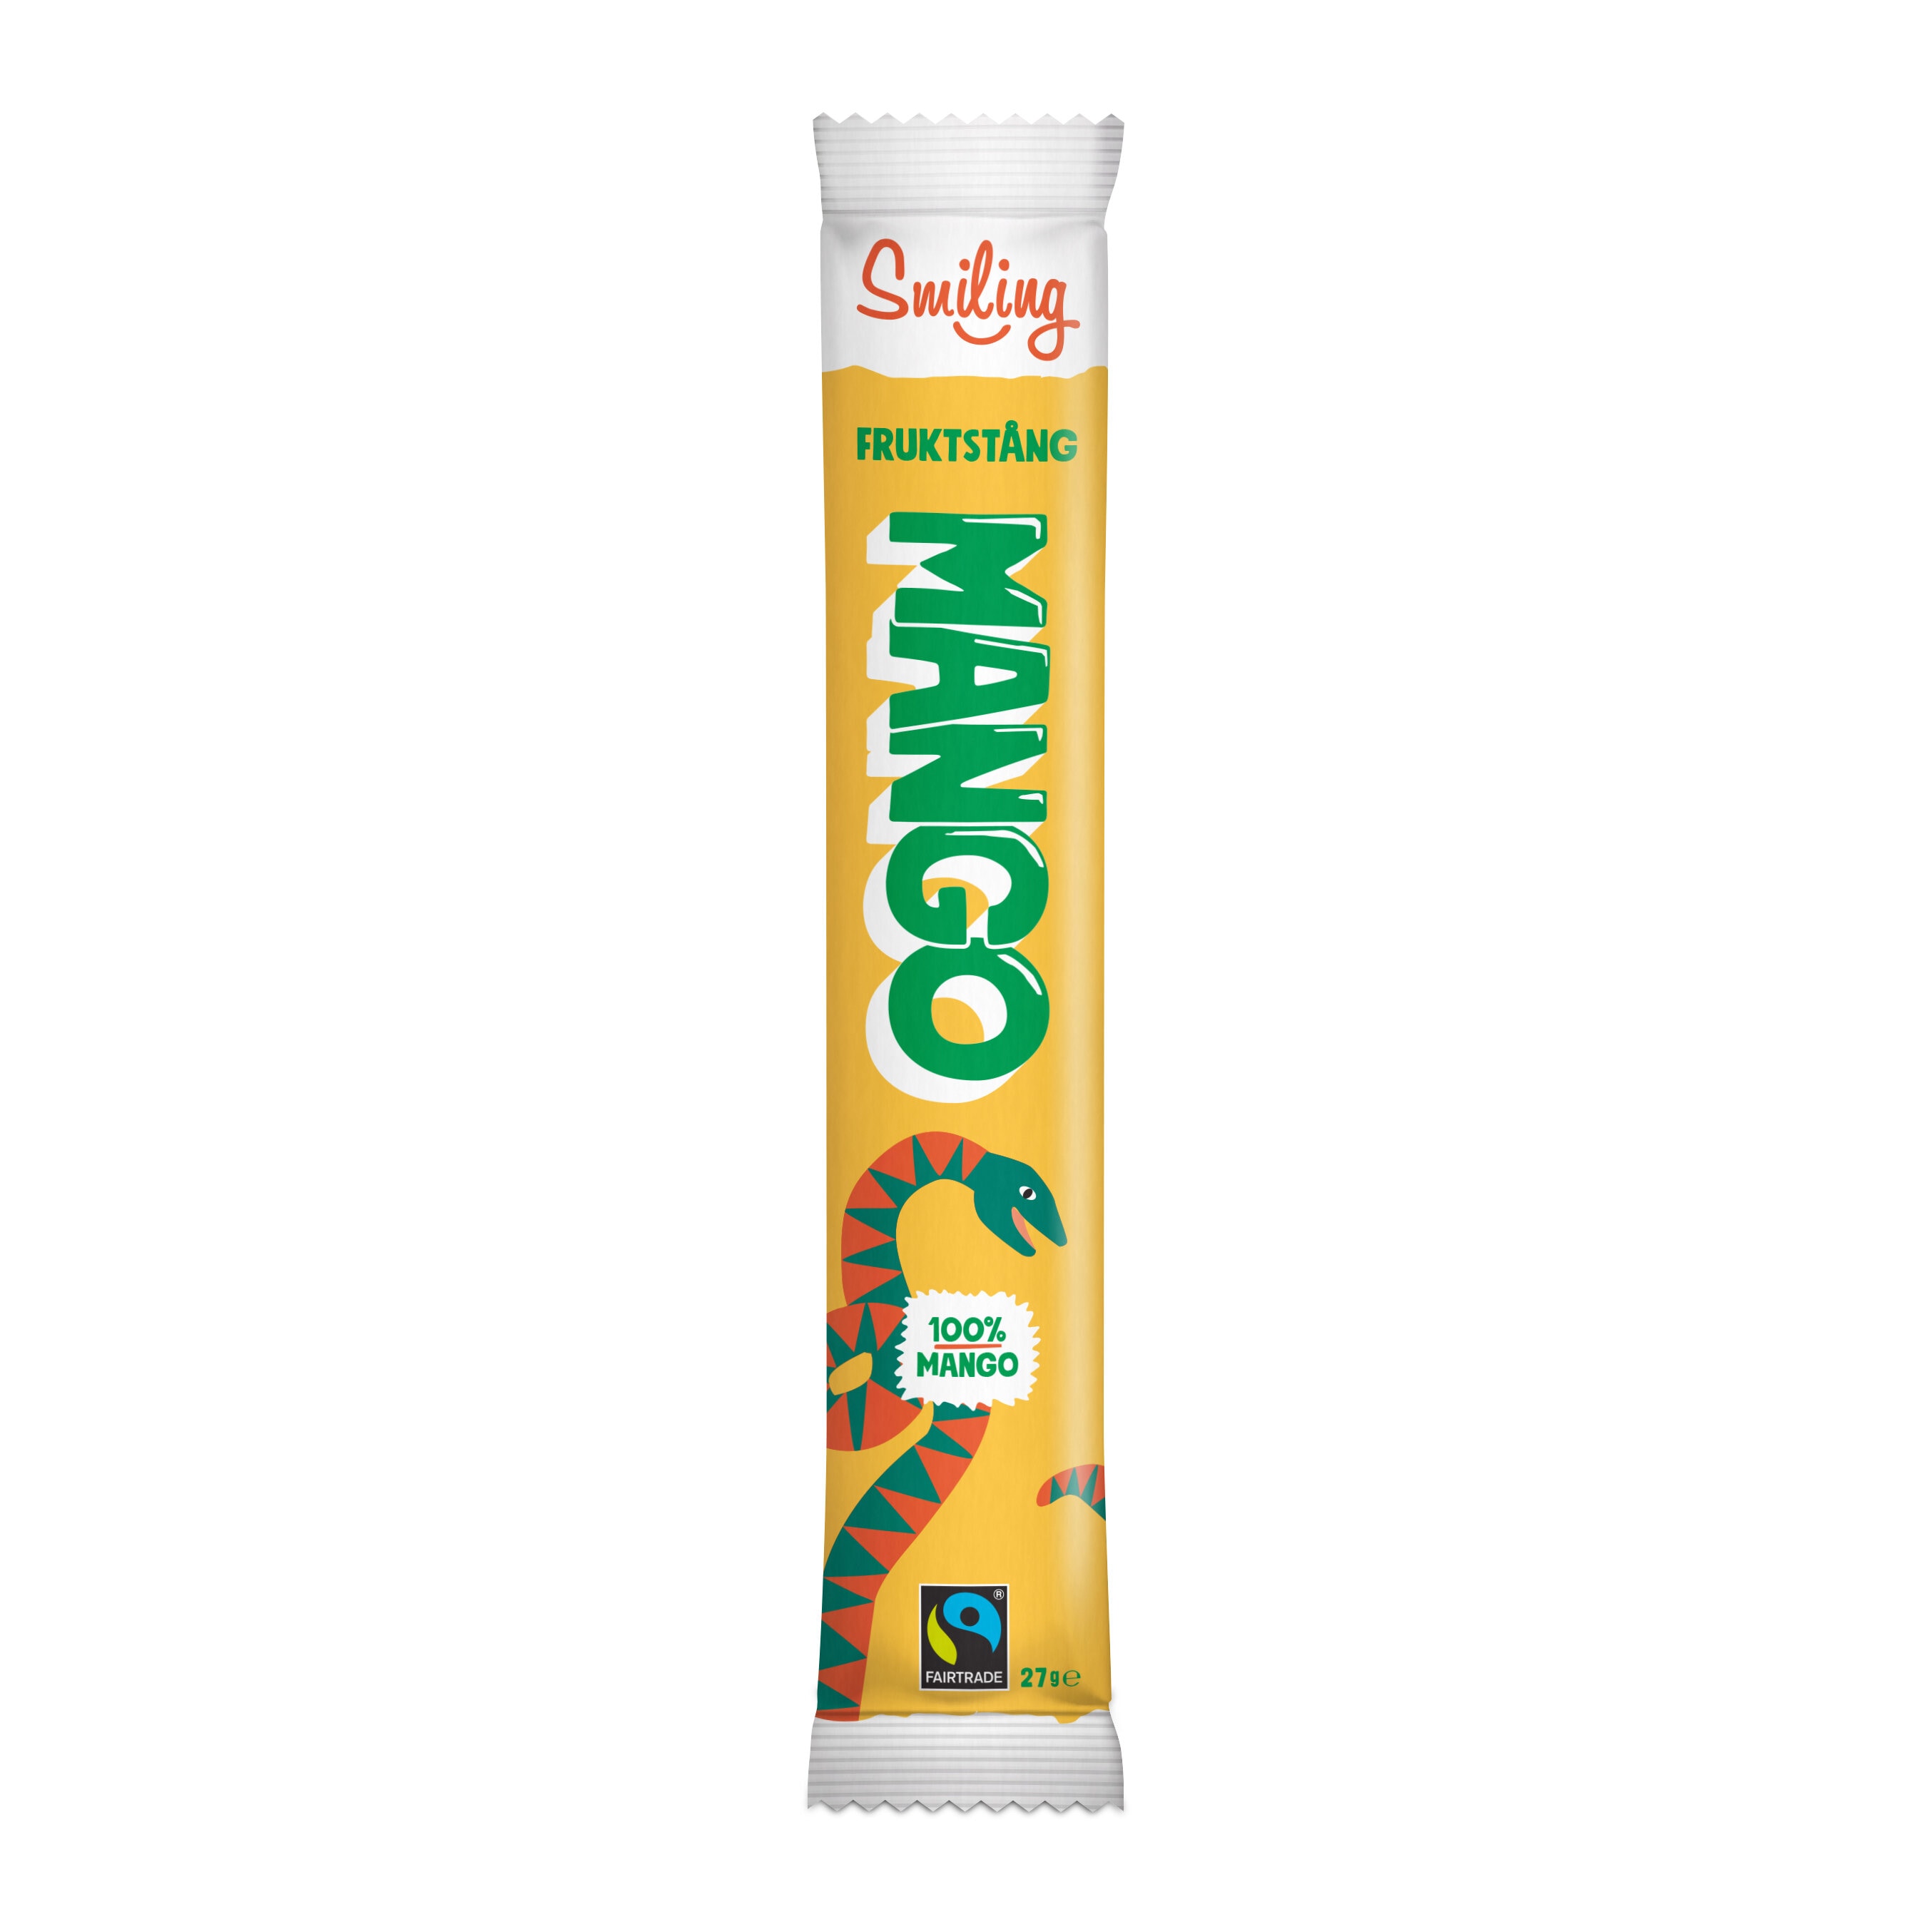 FruktstÃ¥ng 100% Mango 27g 